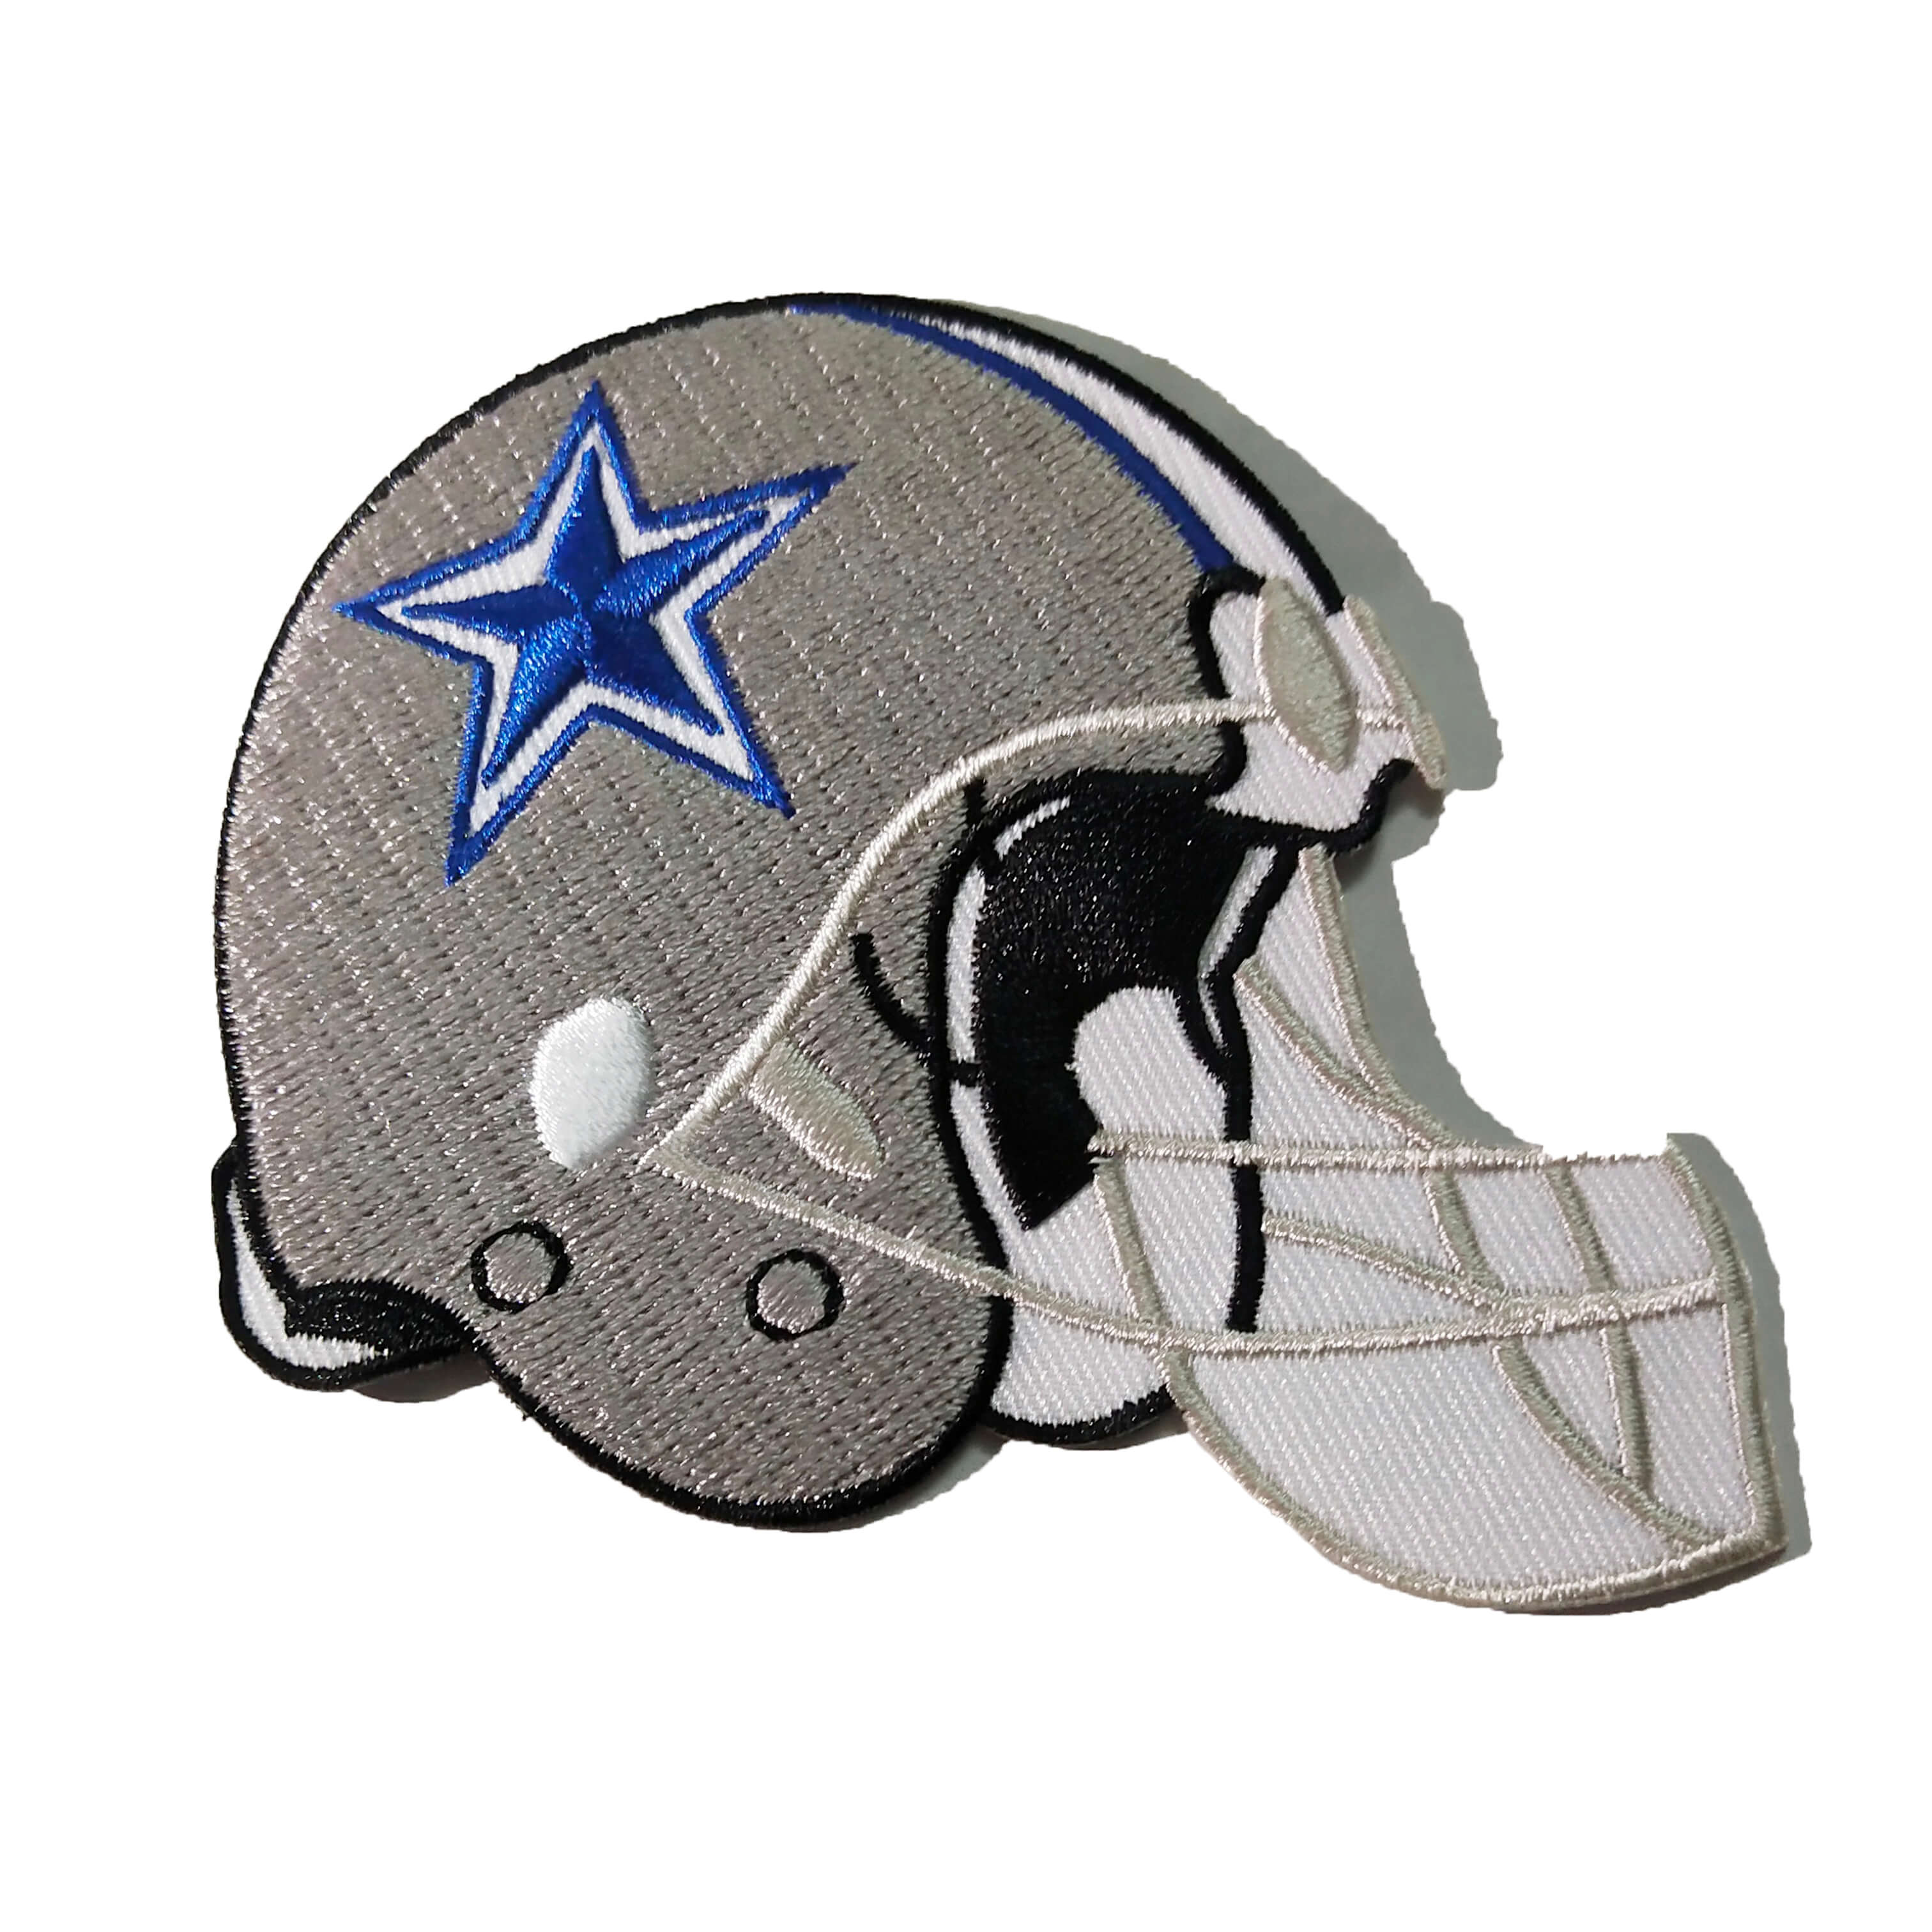 Grayscale Football Helmet patch